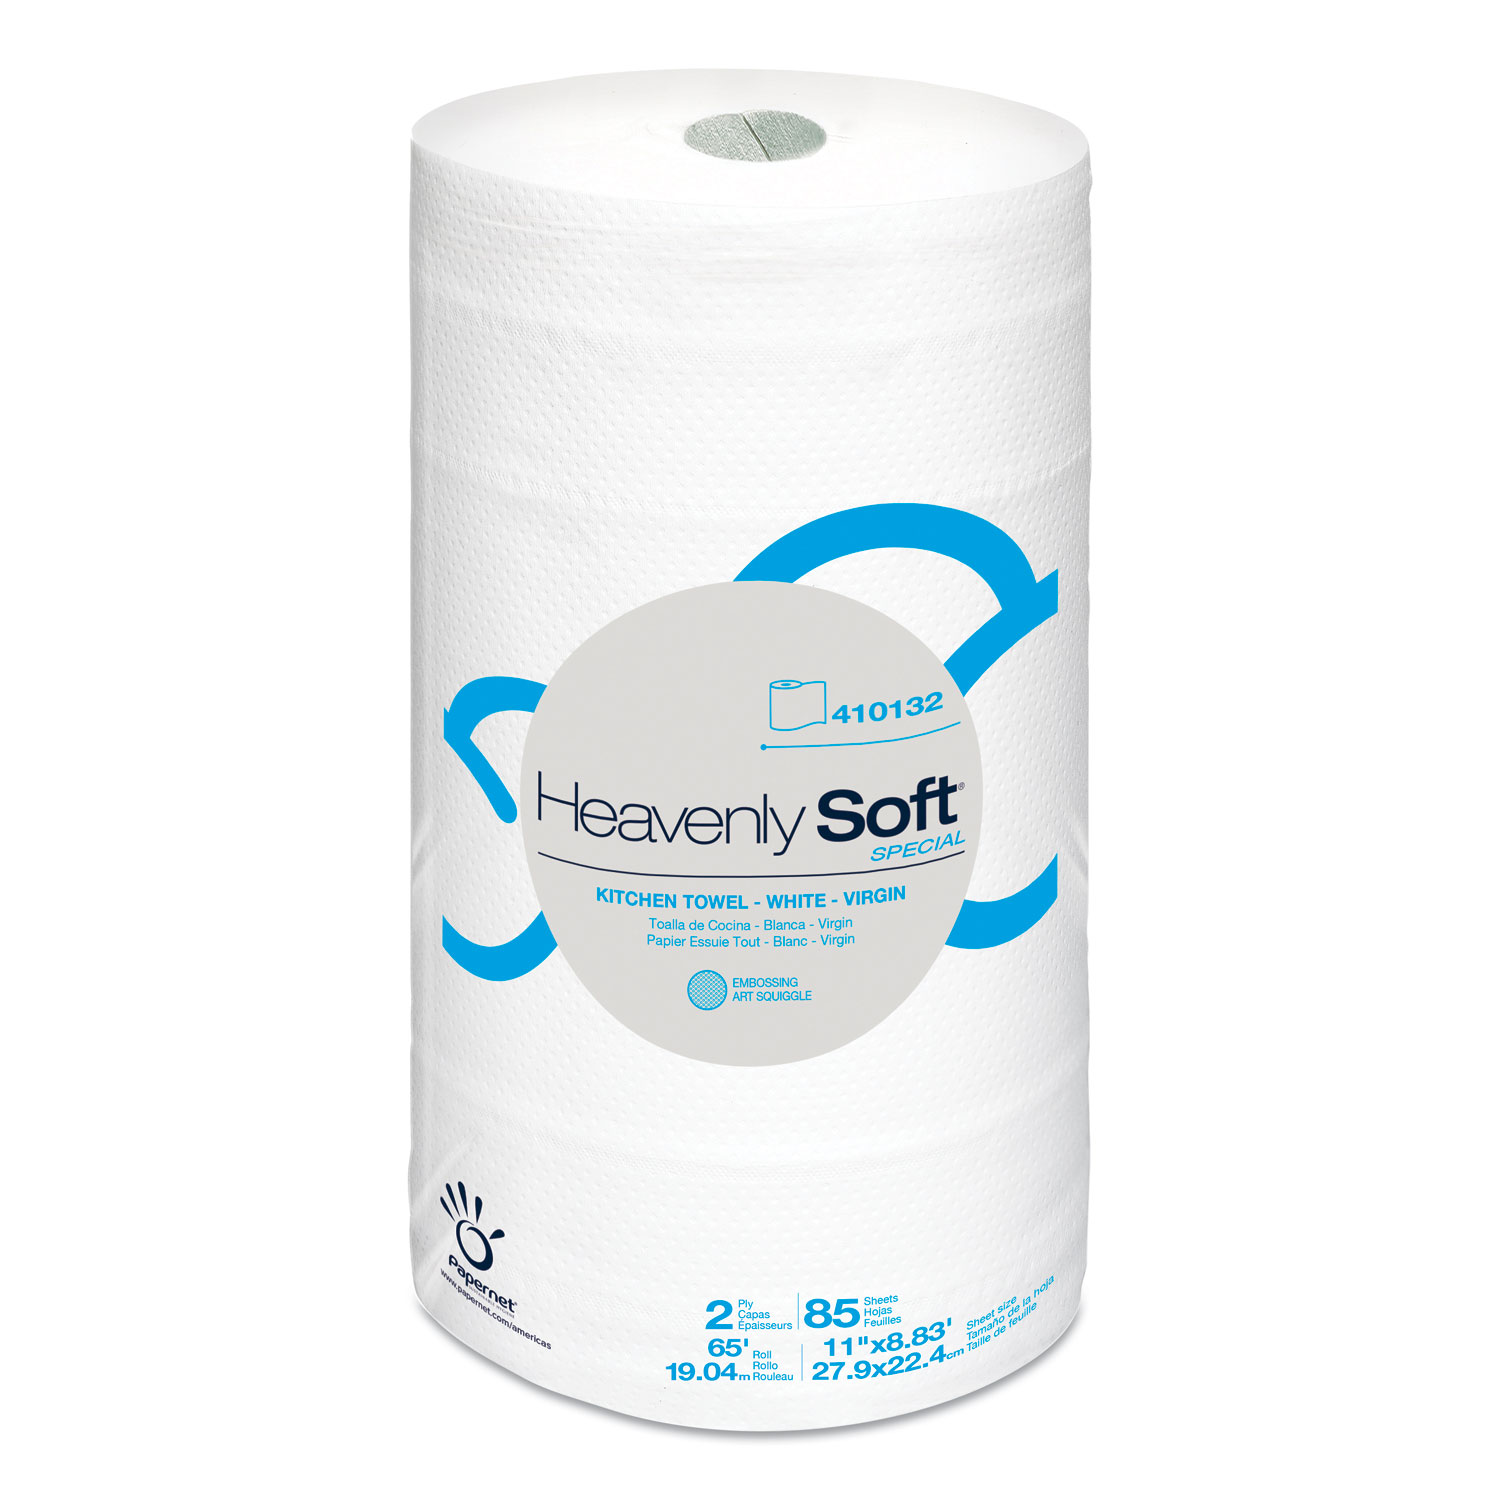  Papernet 410132 Heavenly Soft Paper Towel, 11 x 8.8, White, 30/Carton (SOD410132) 